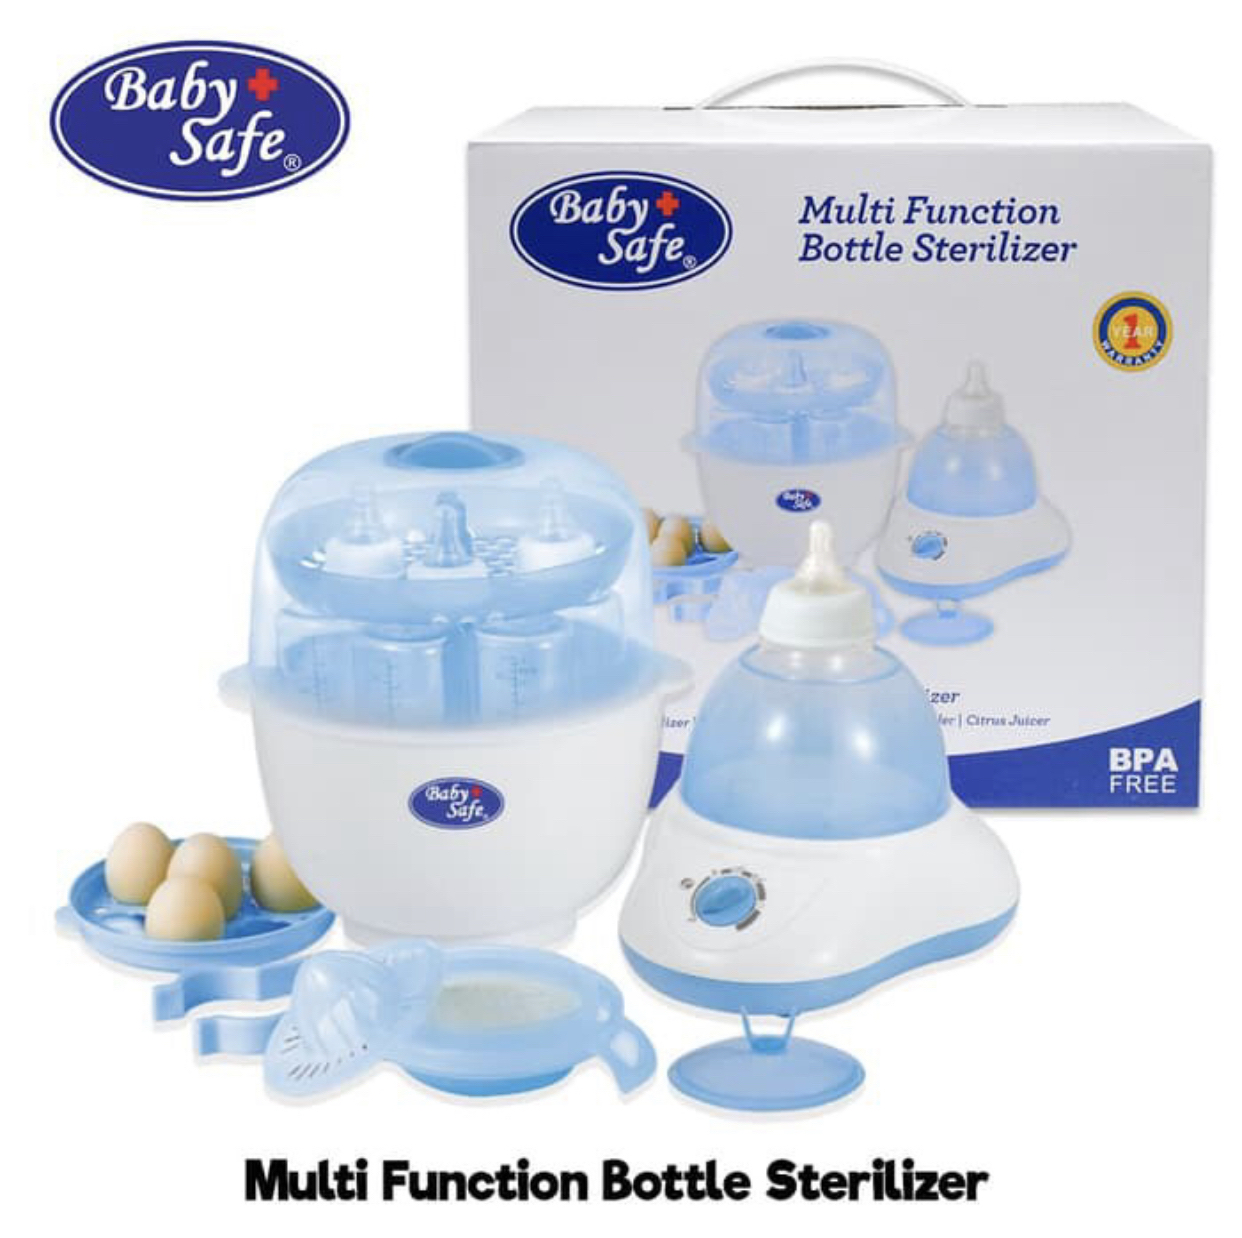 2.Baby safe multifunction bottle steriler